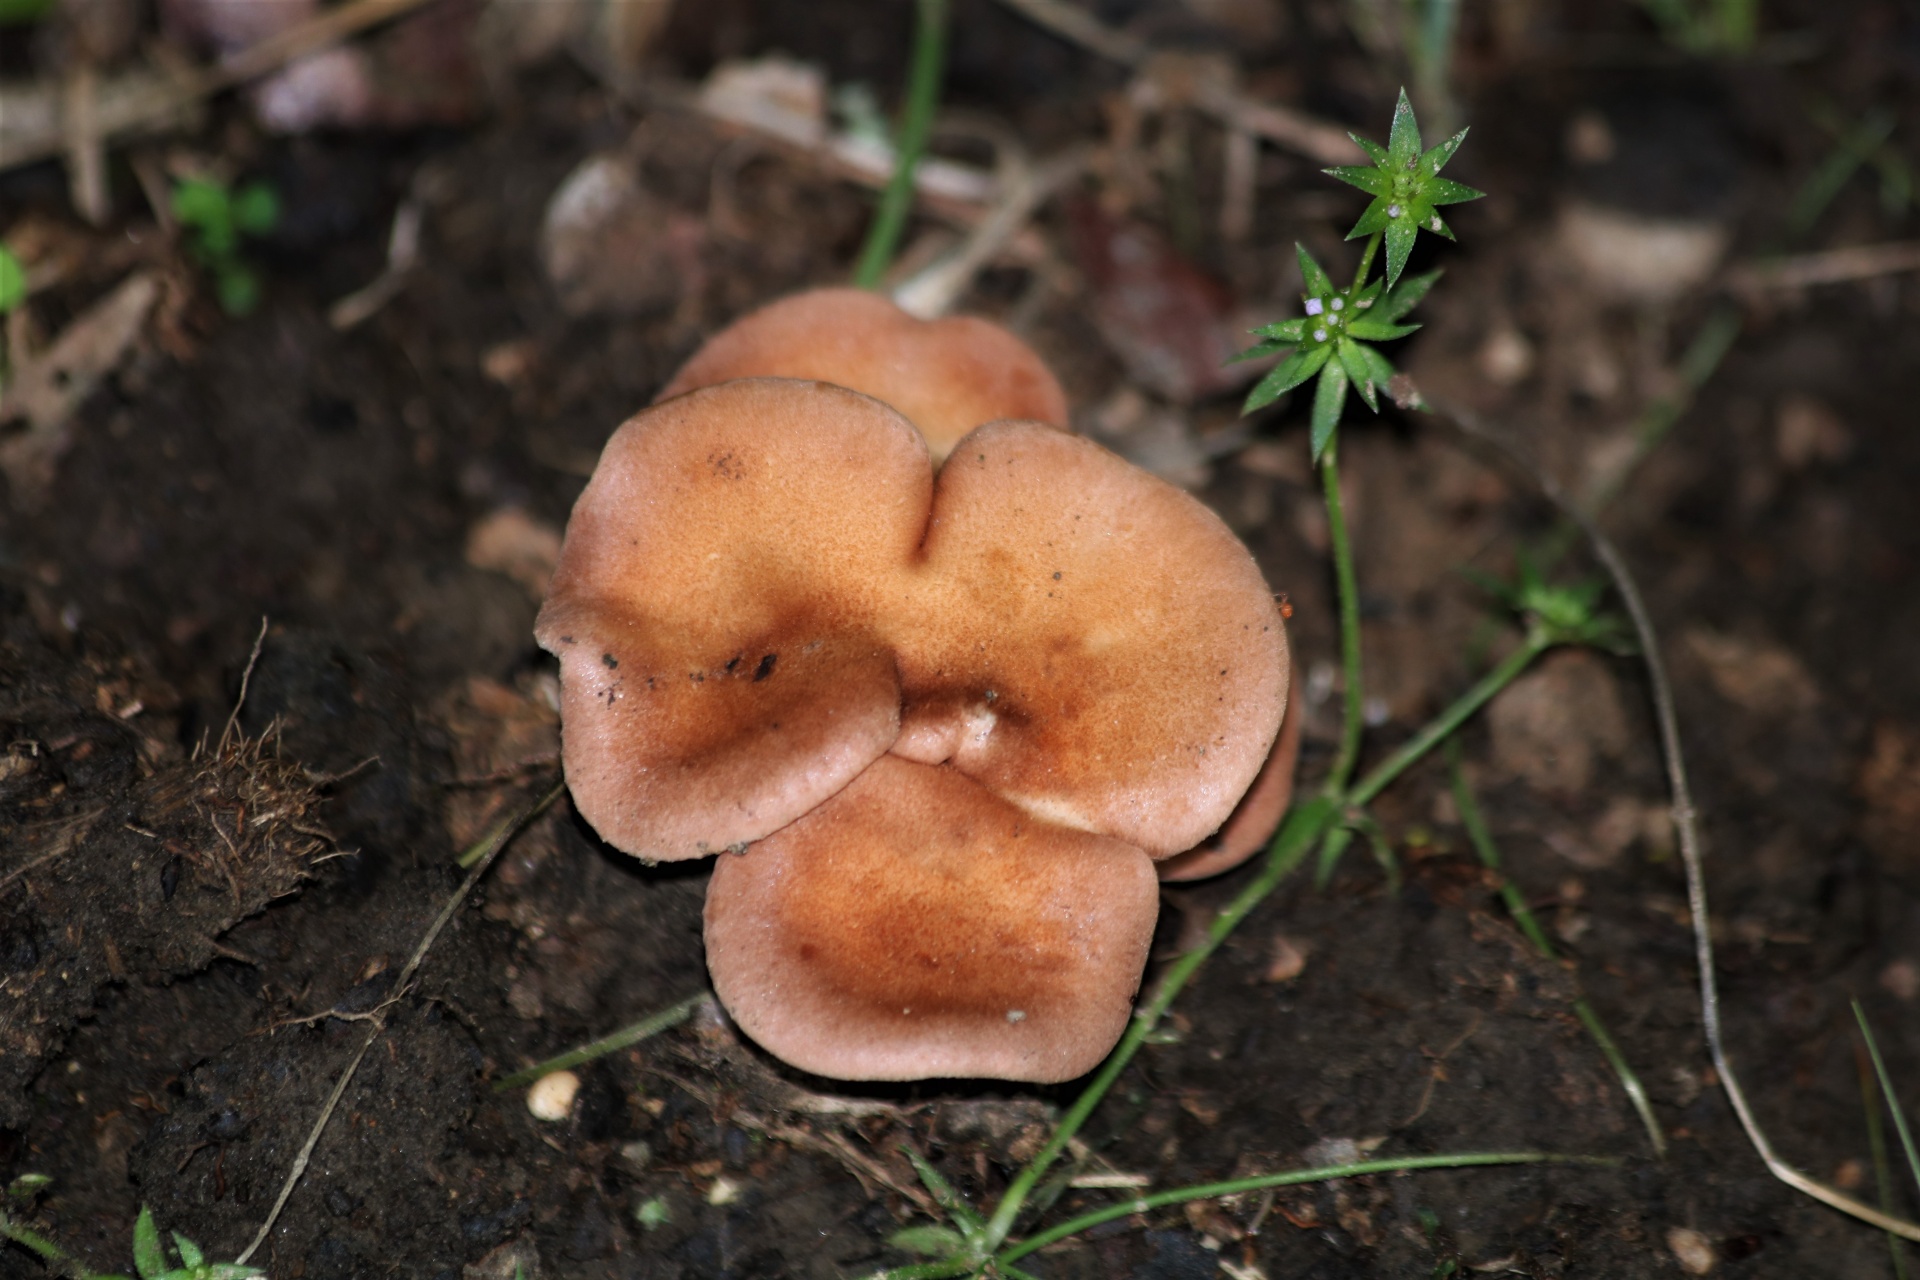 Close-up of a brown mushroom shaped like a flower bloom.